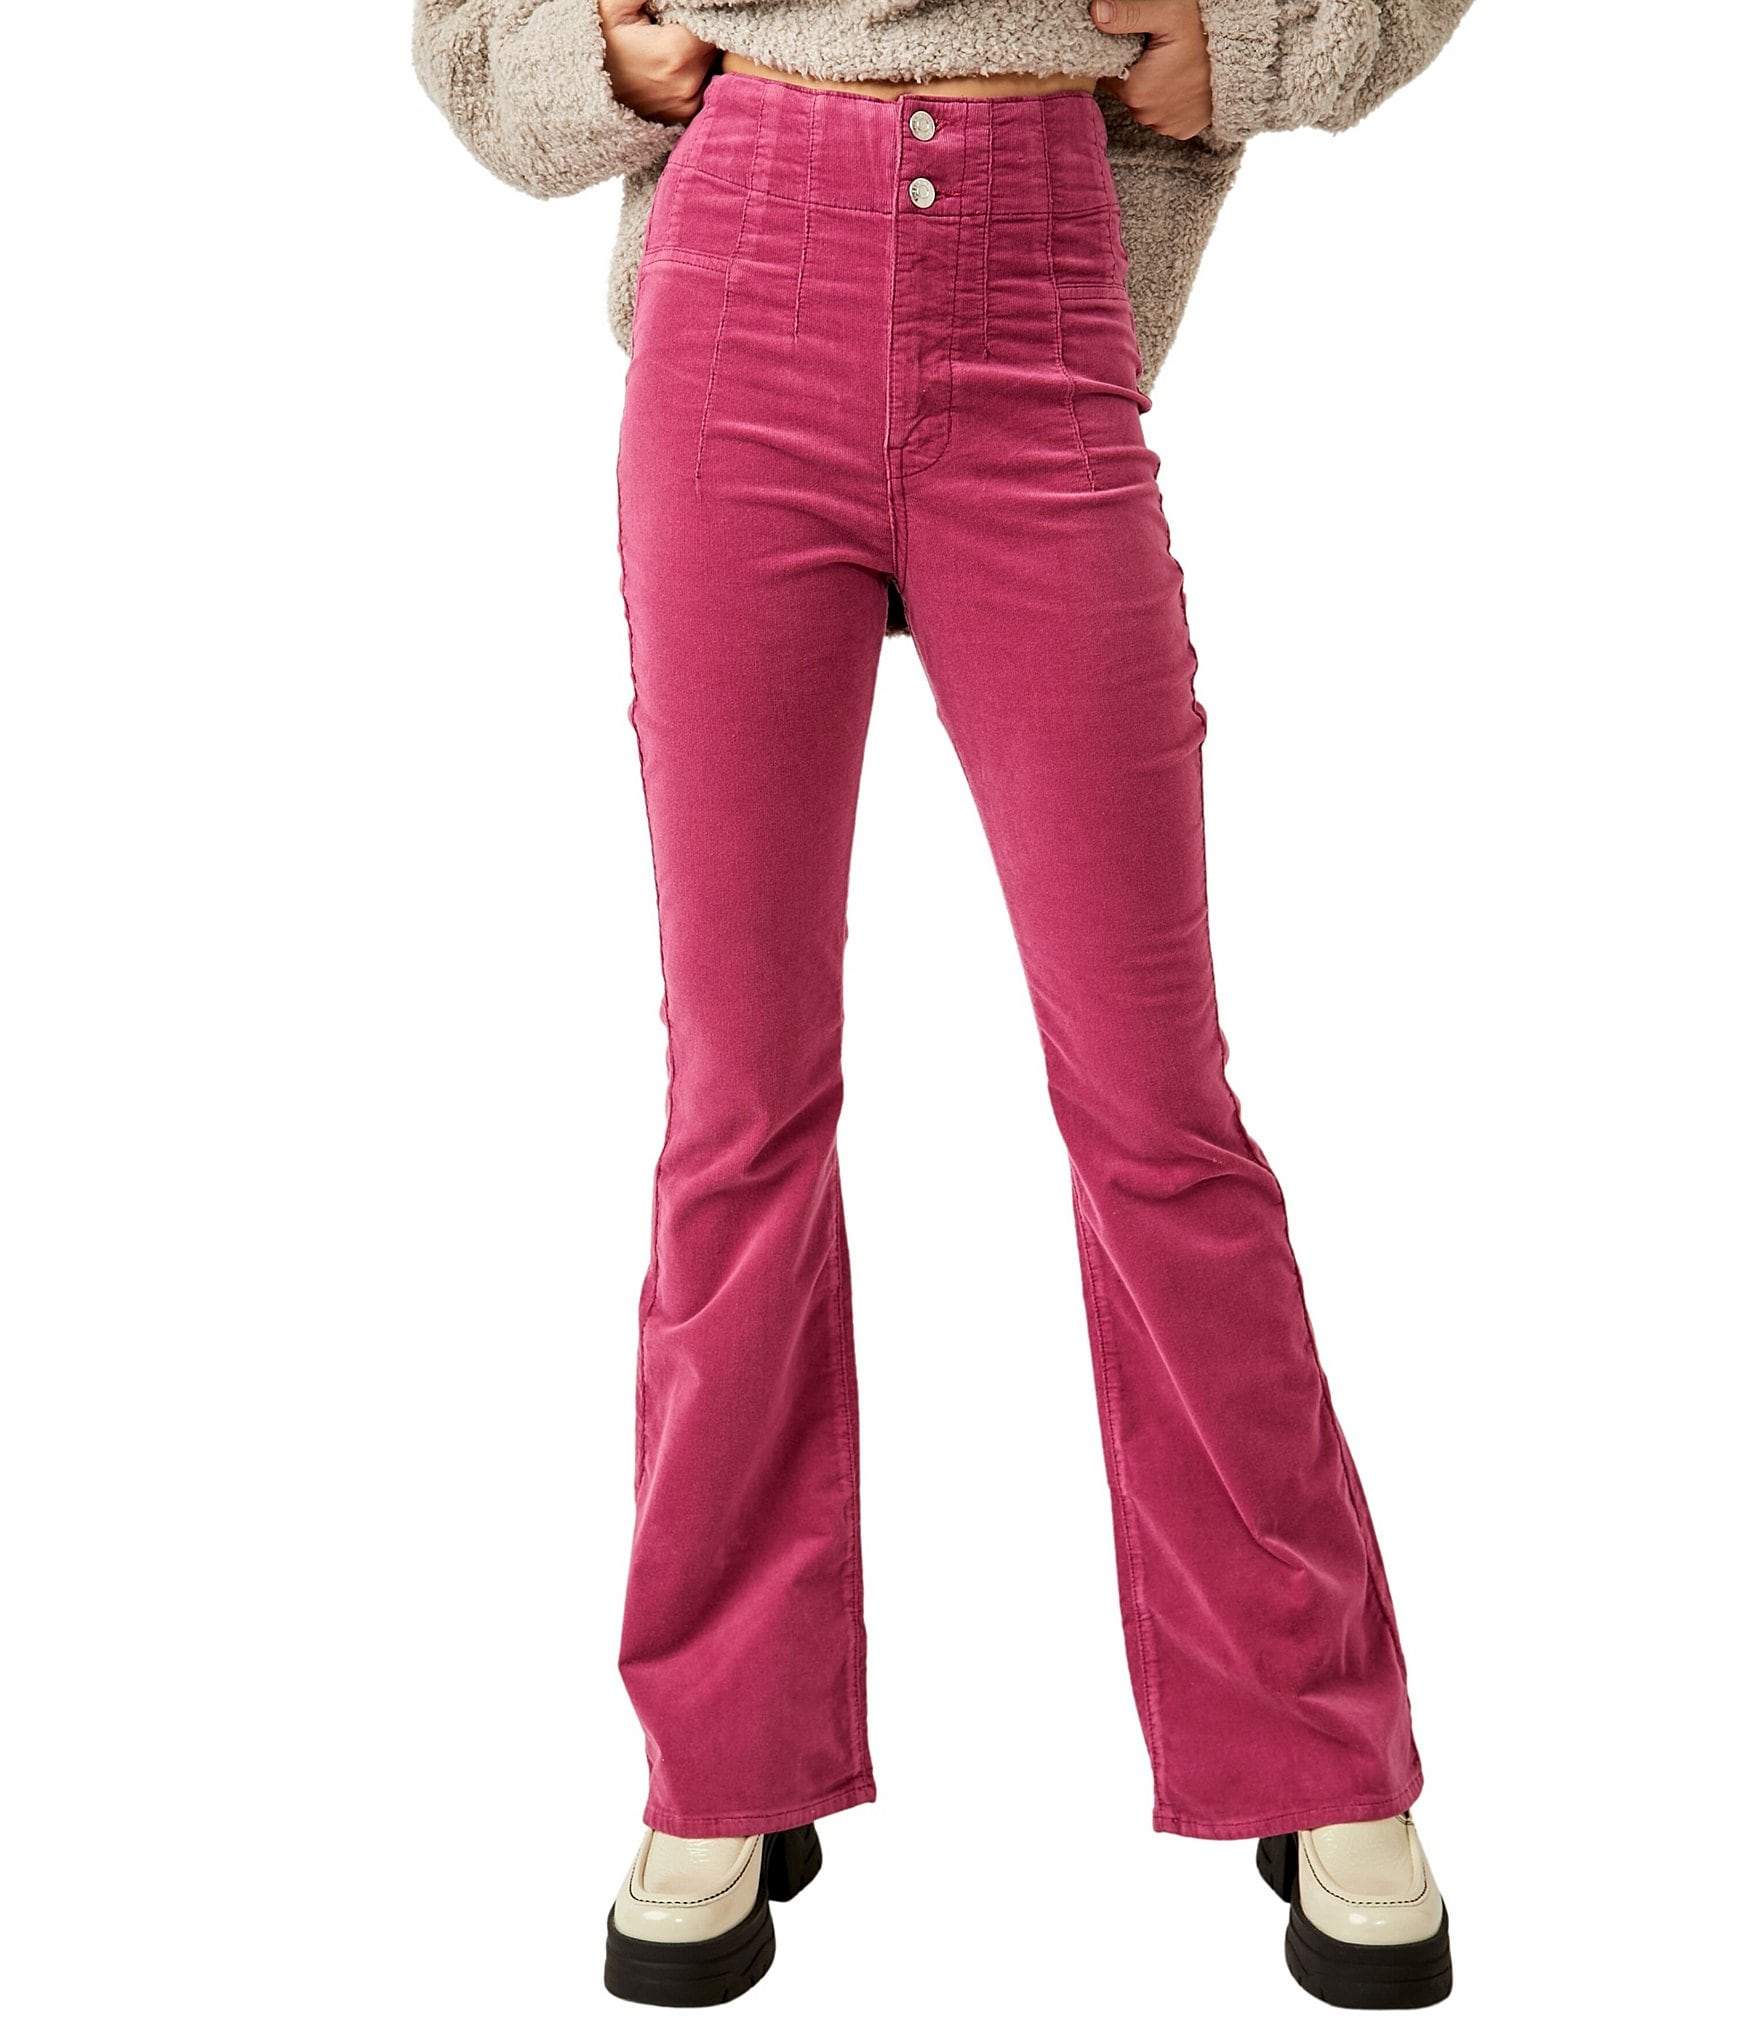 AE Stretch Corduroy Super High-Waisted Flare Pant  Womens flare jeans,  High waisted flare pants, High waisted flares